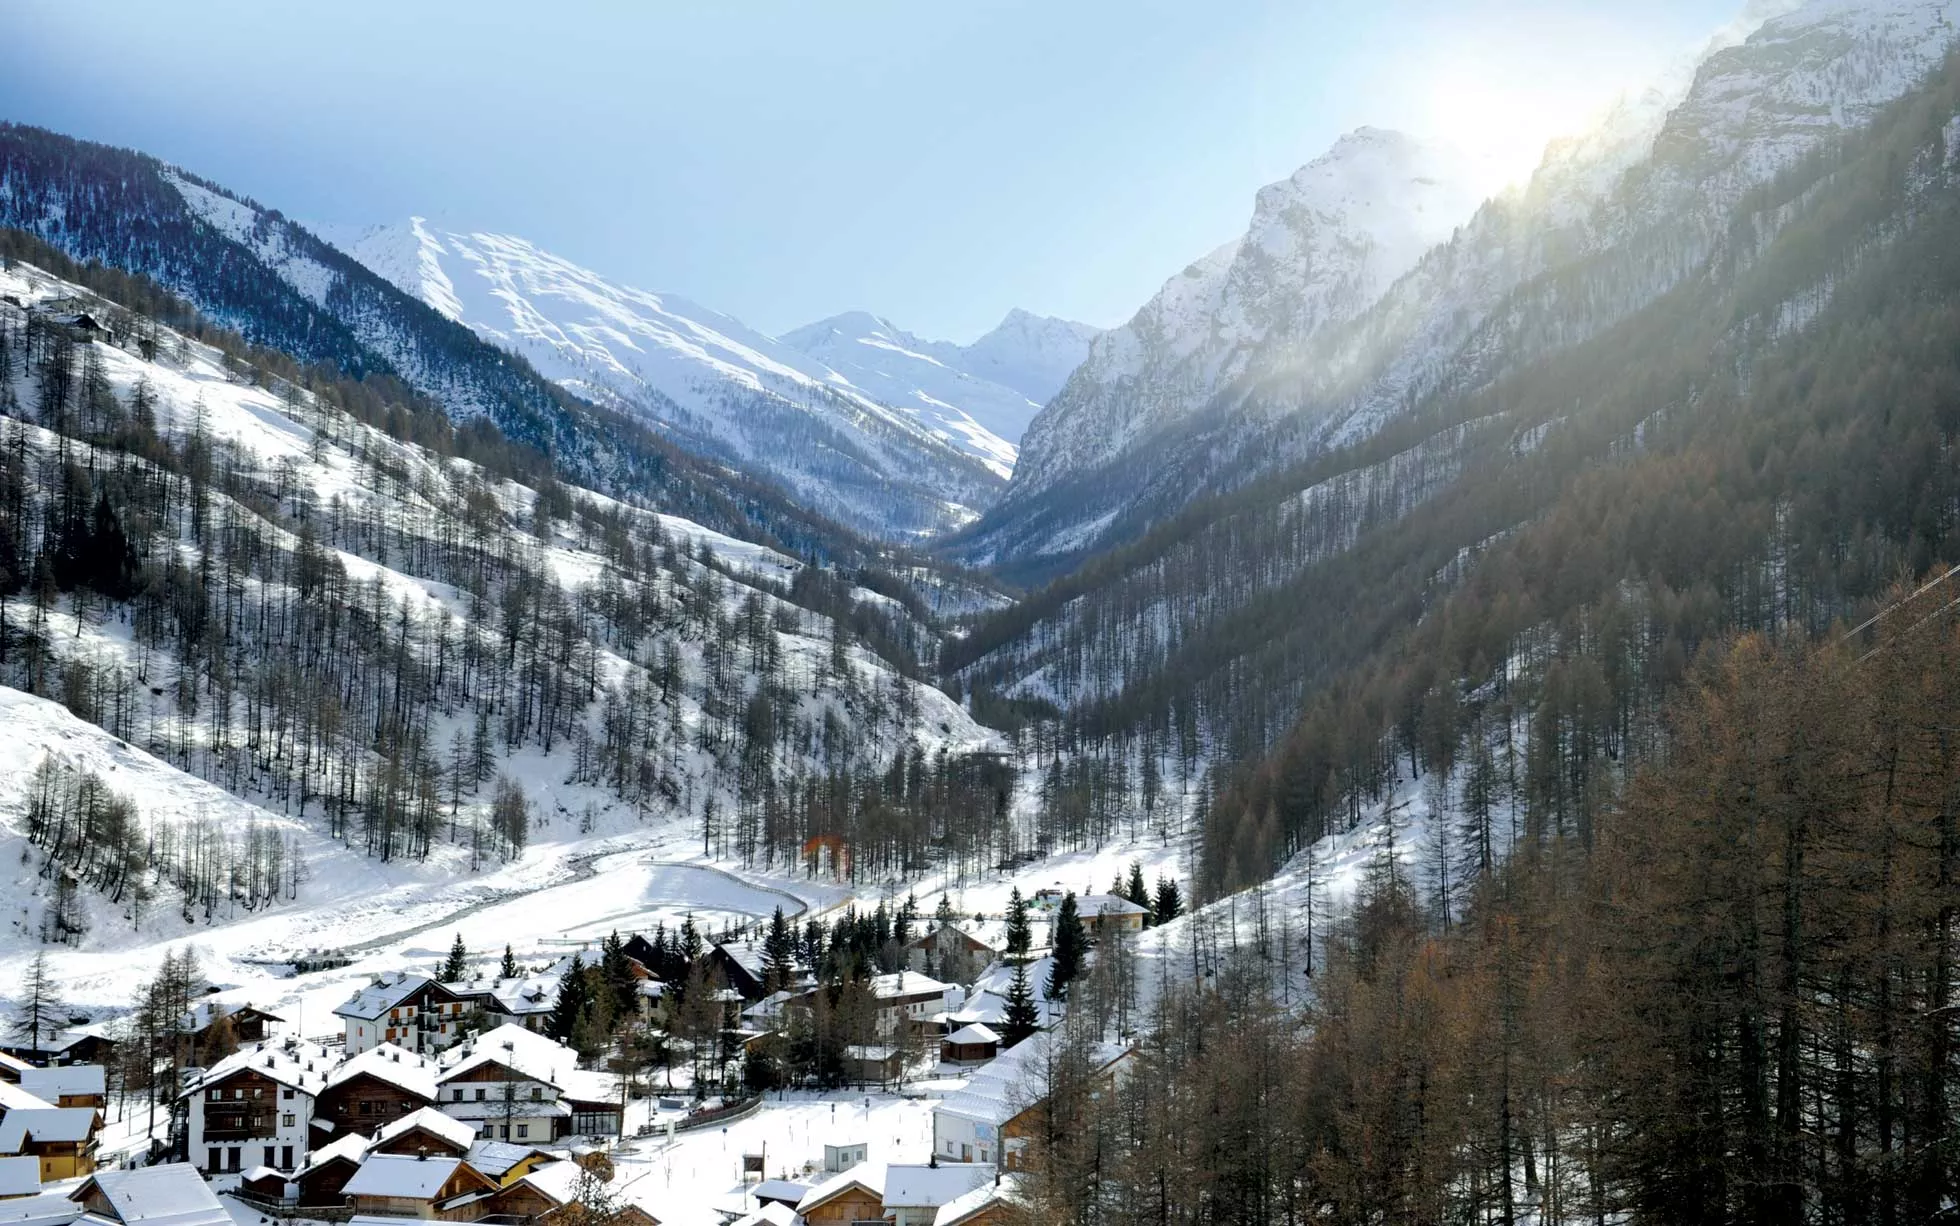 Pragelato in Italy, Europe | Snowboarding,Skiing - Rated 0.8